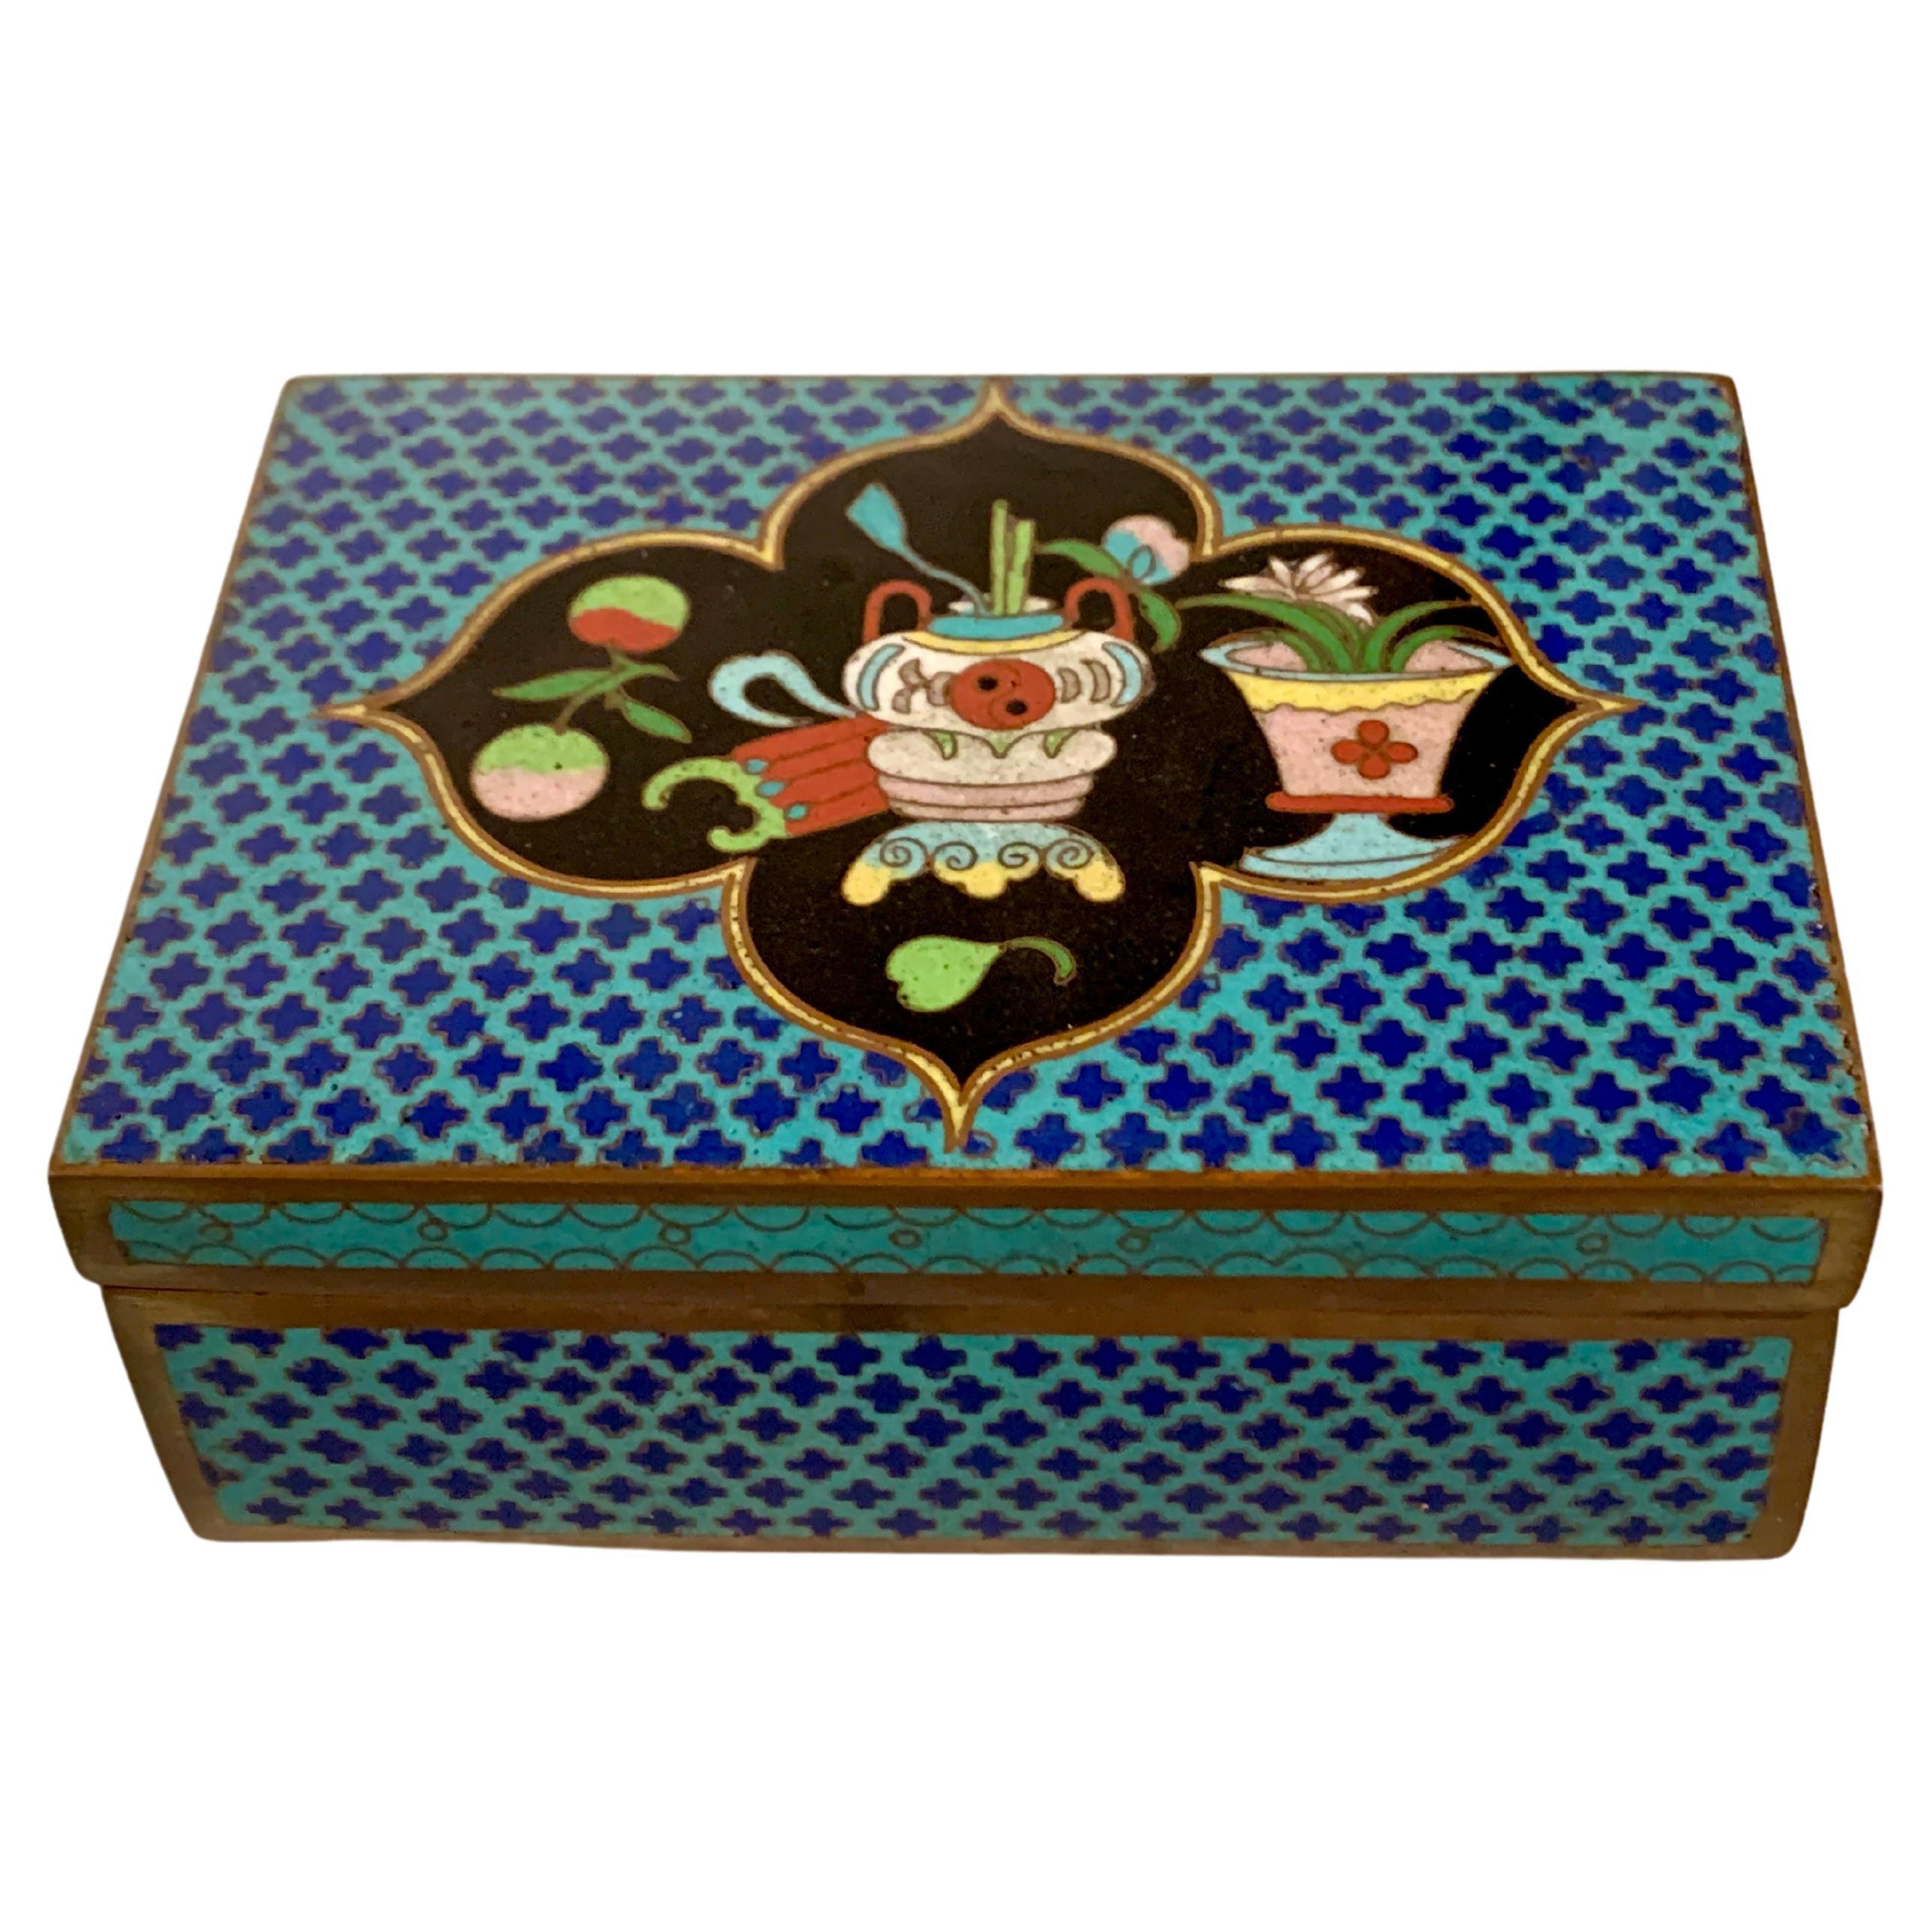 Chinese Turquoise Cloisonne Trinket Box, Republic Period, c 1920, China